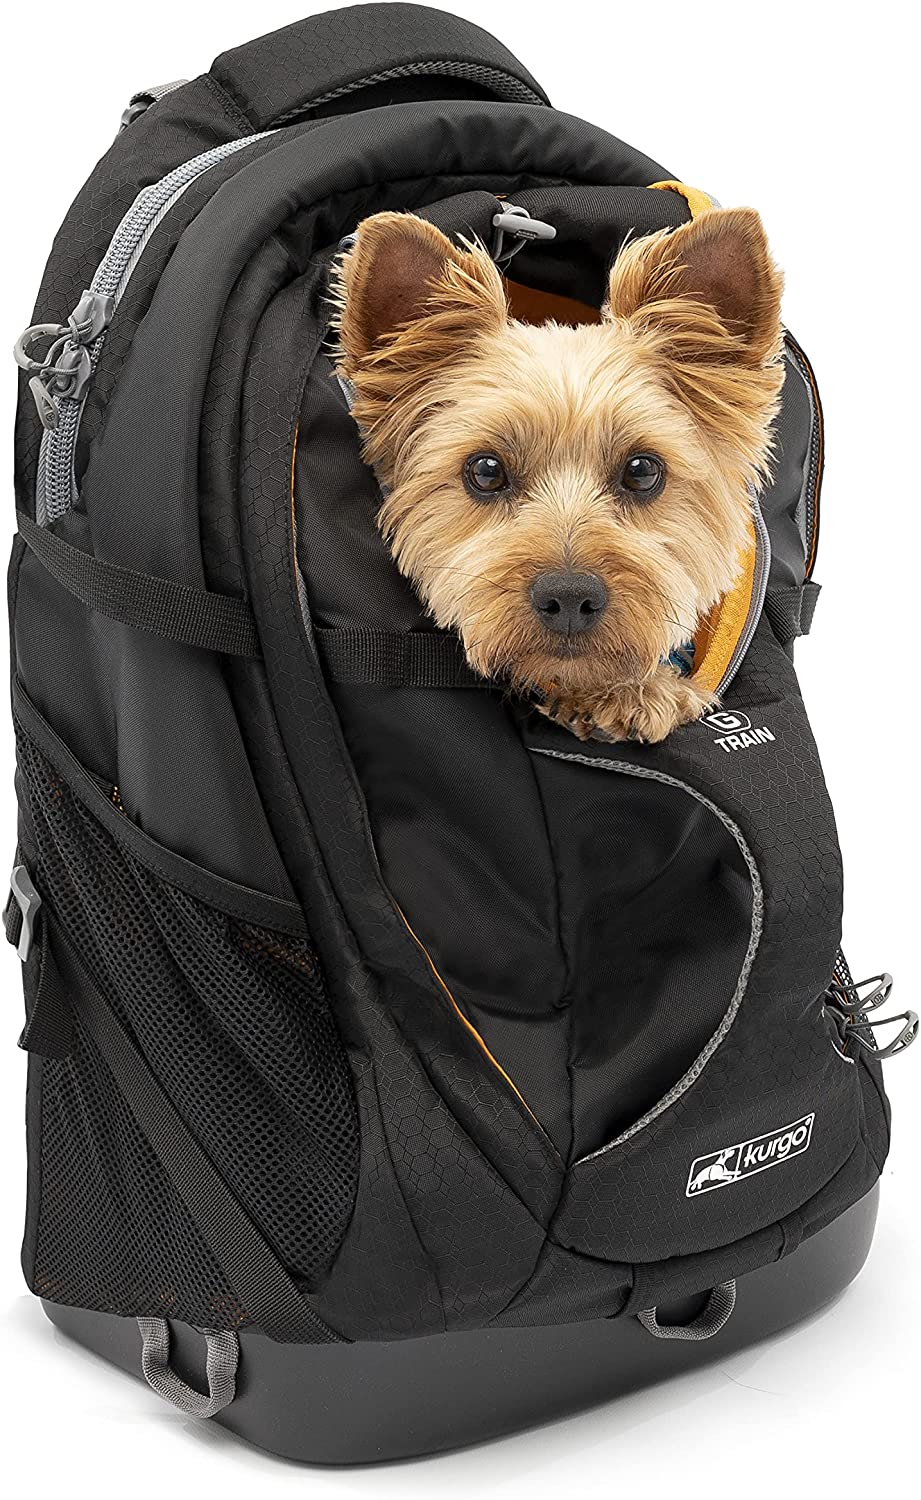 Kurgo G-Train - Dog Carrier Backpack